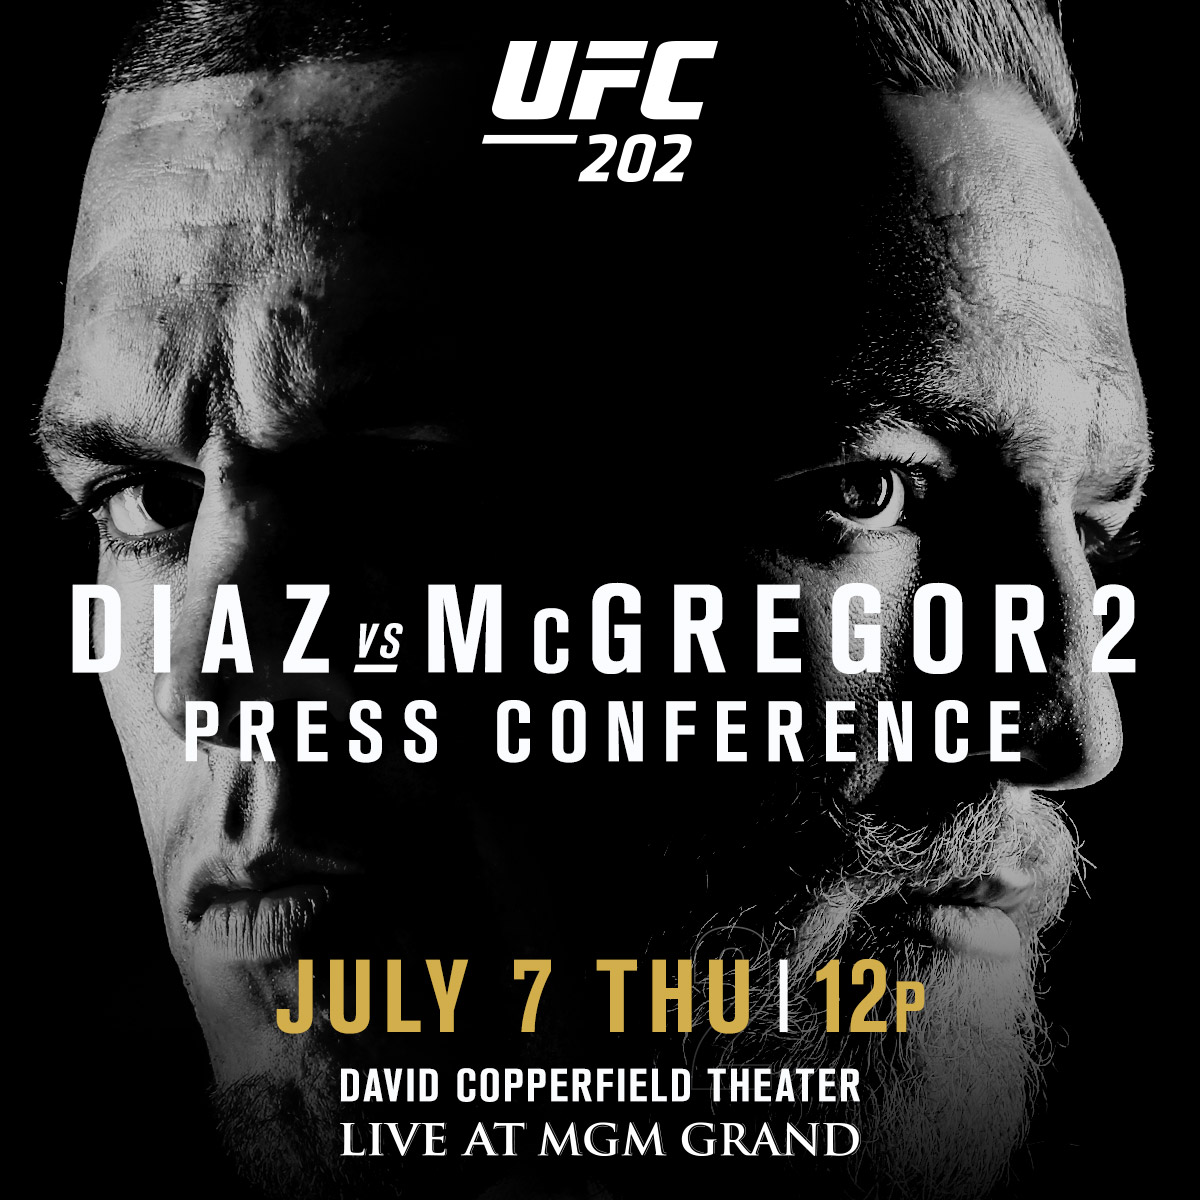 DiazMcGregor 2 press conference added to International Fight Week